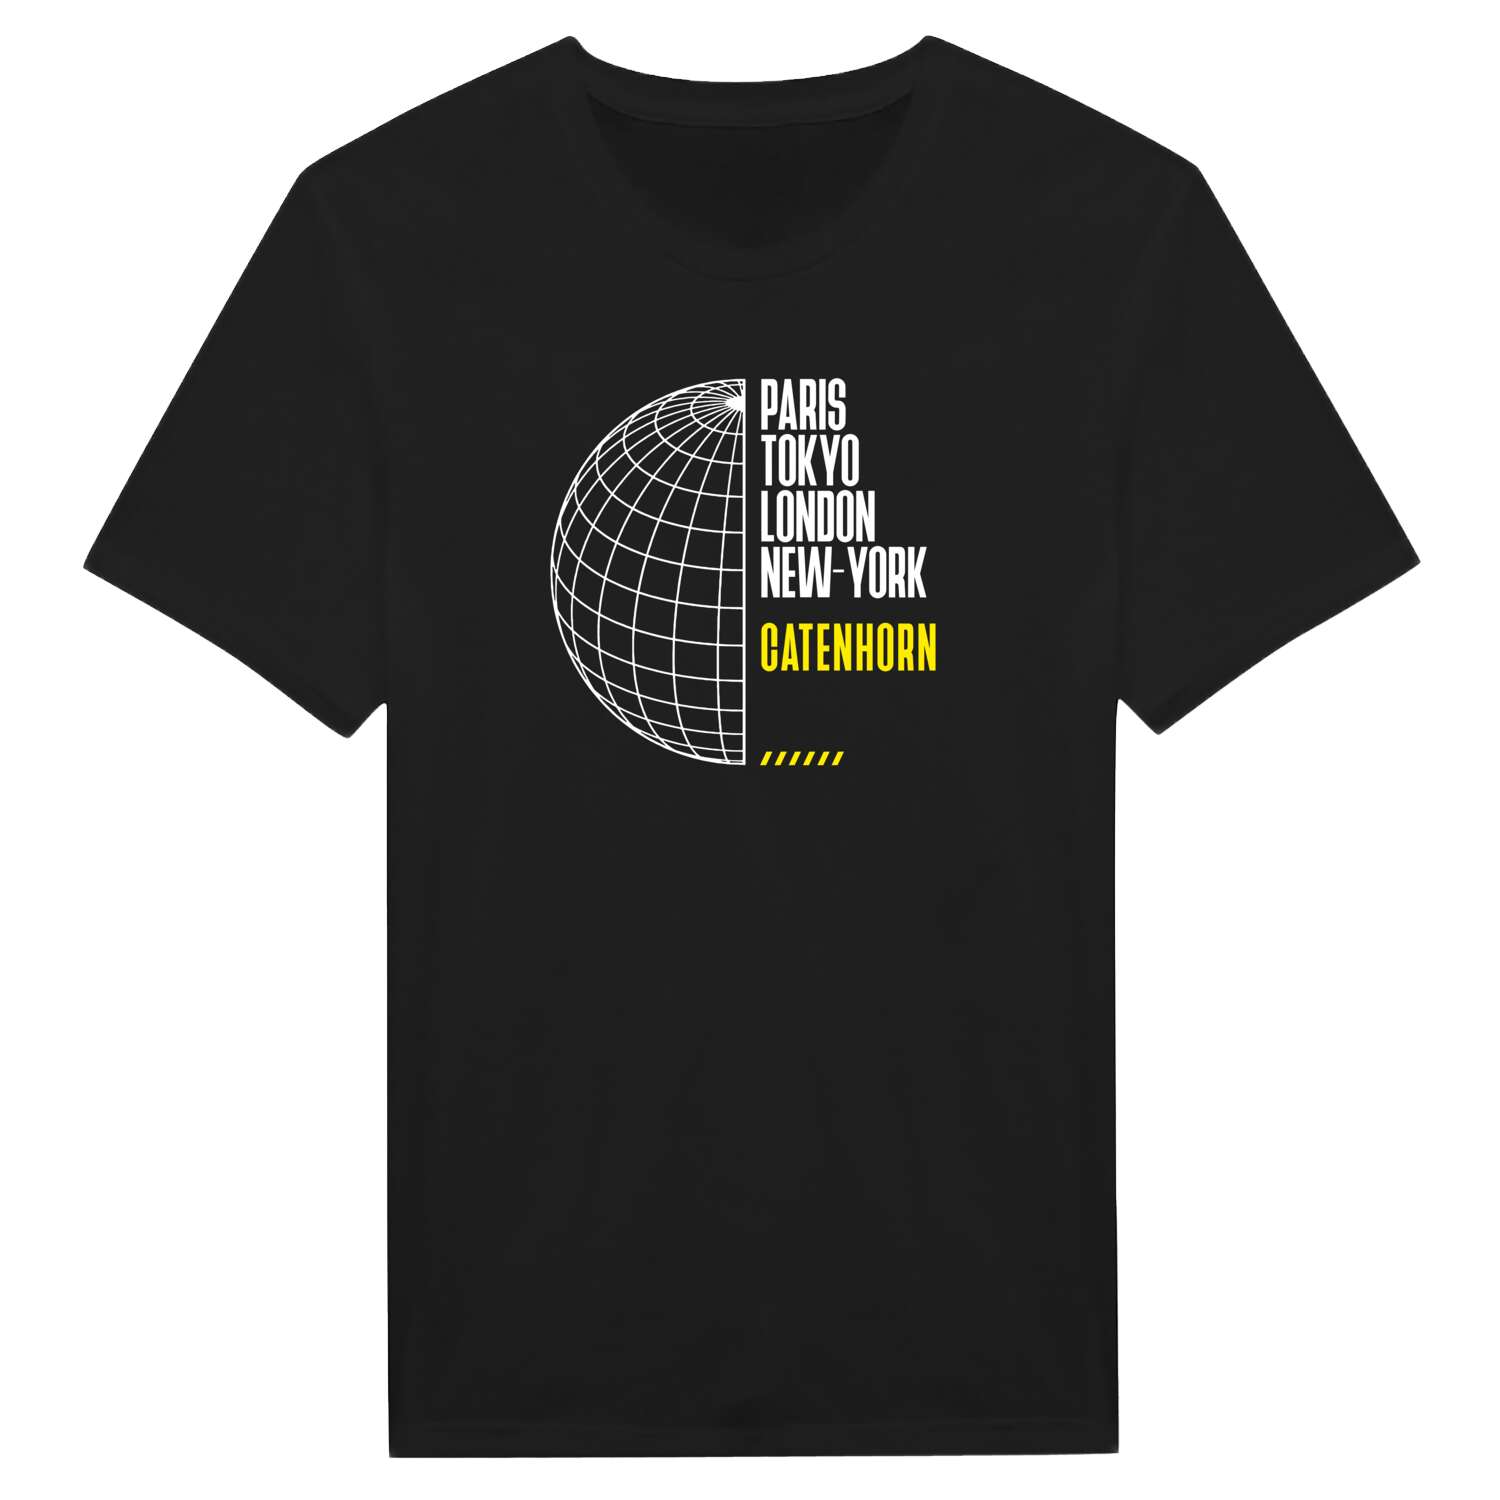 Catenhorn T-Shirt »Paris Tokyo London«